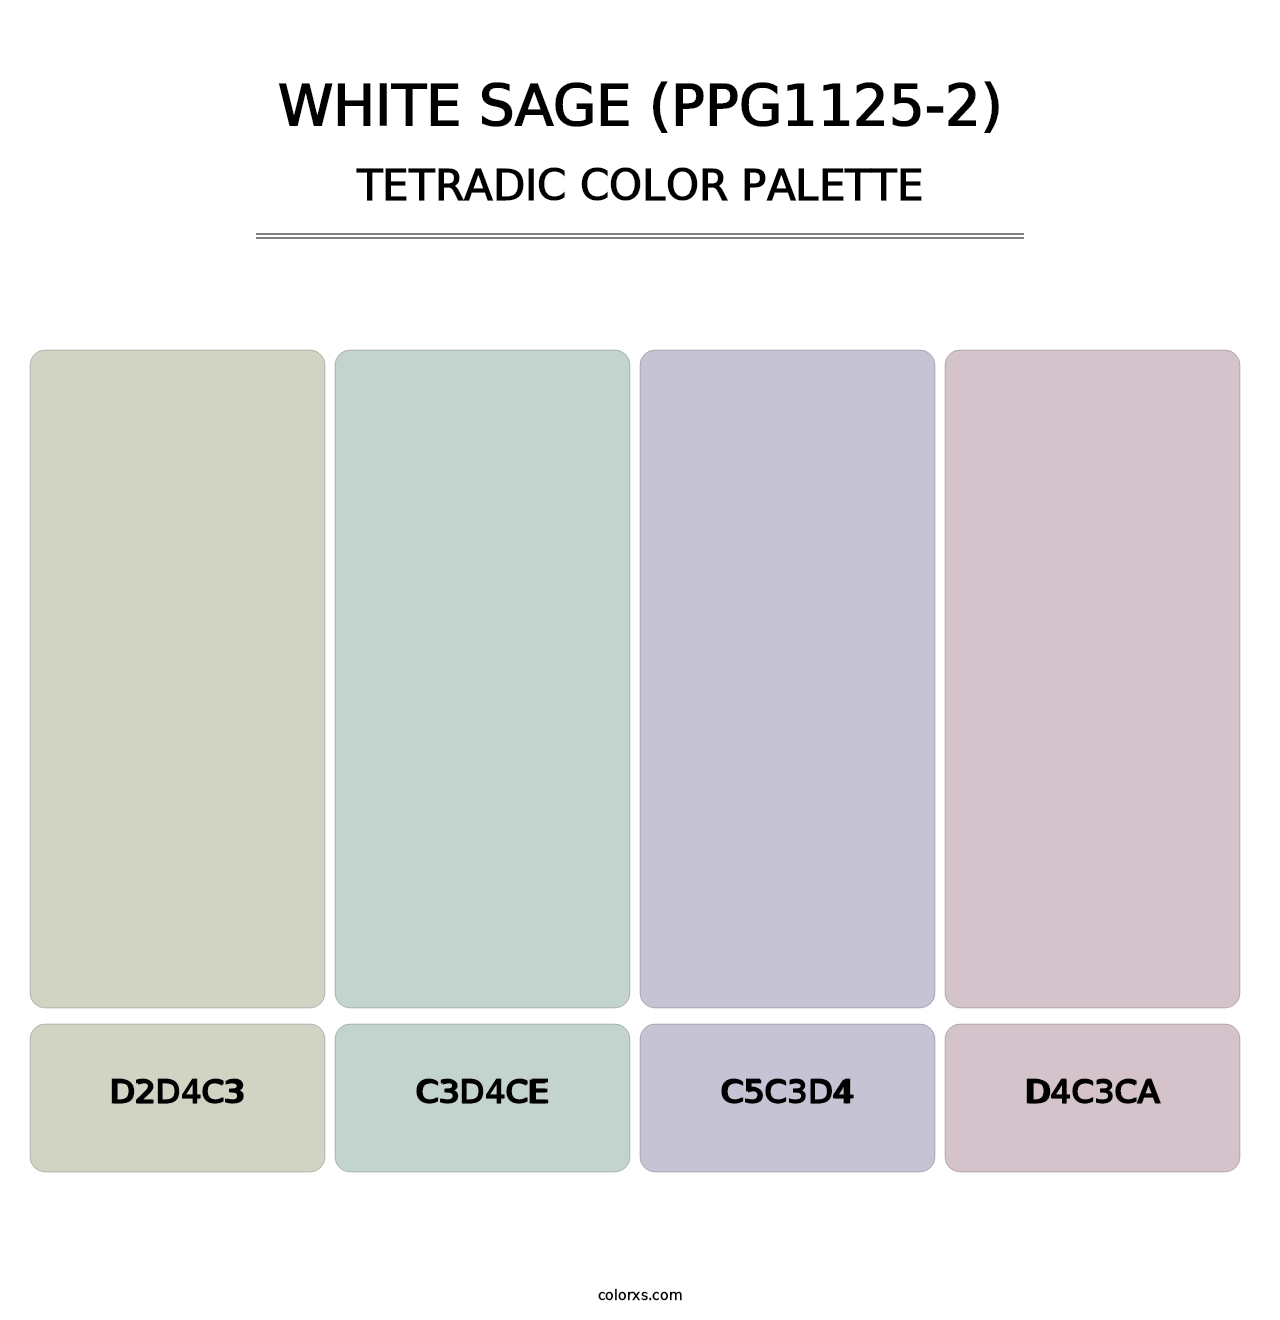 White Sage (PPG1125-2) - Tetradic Color Palette